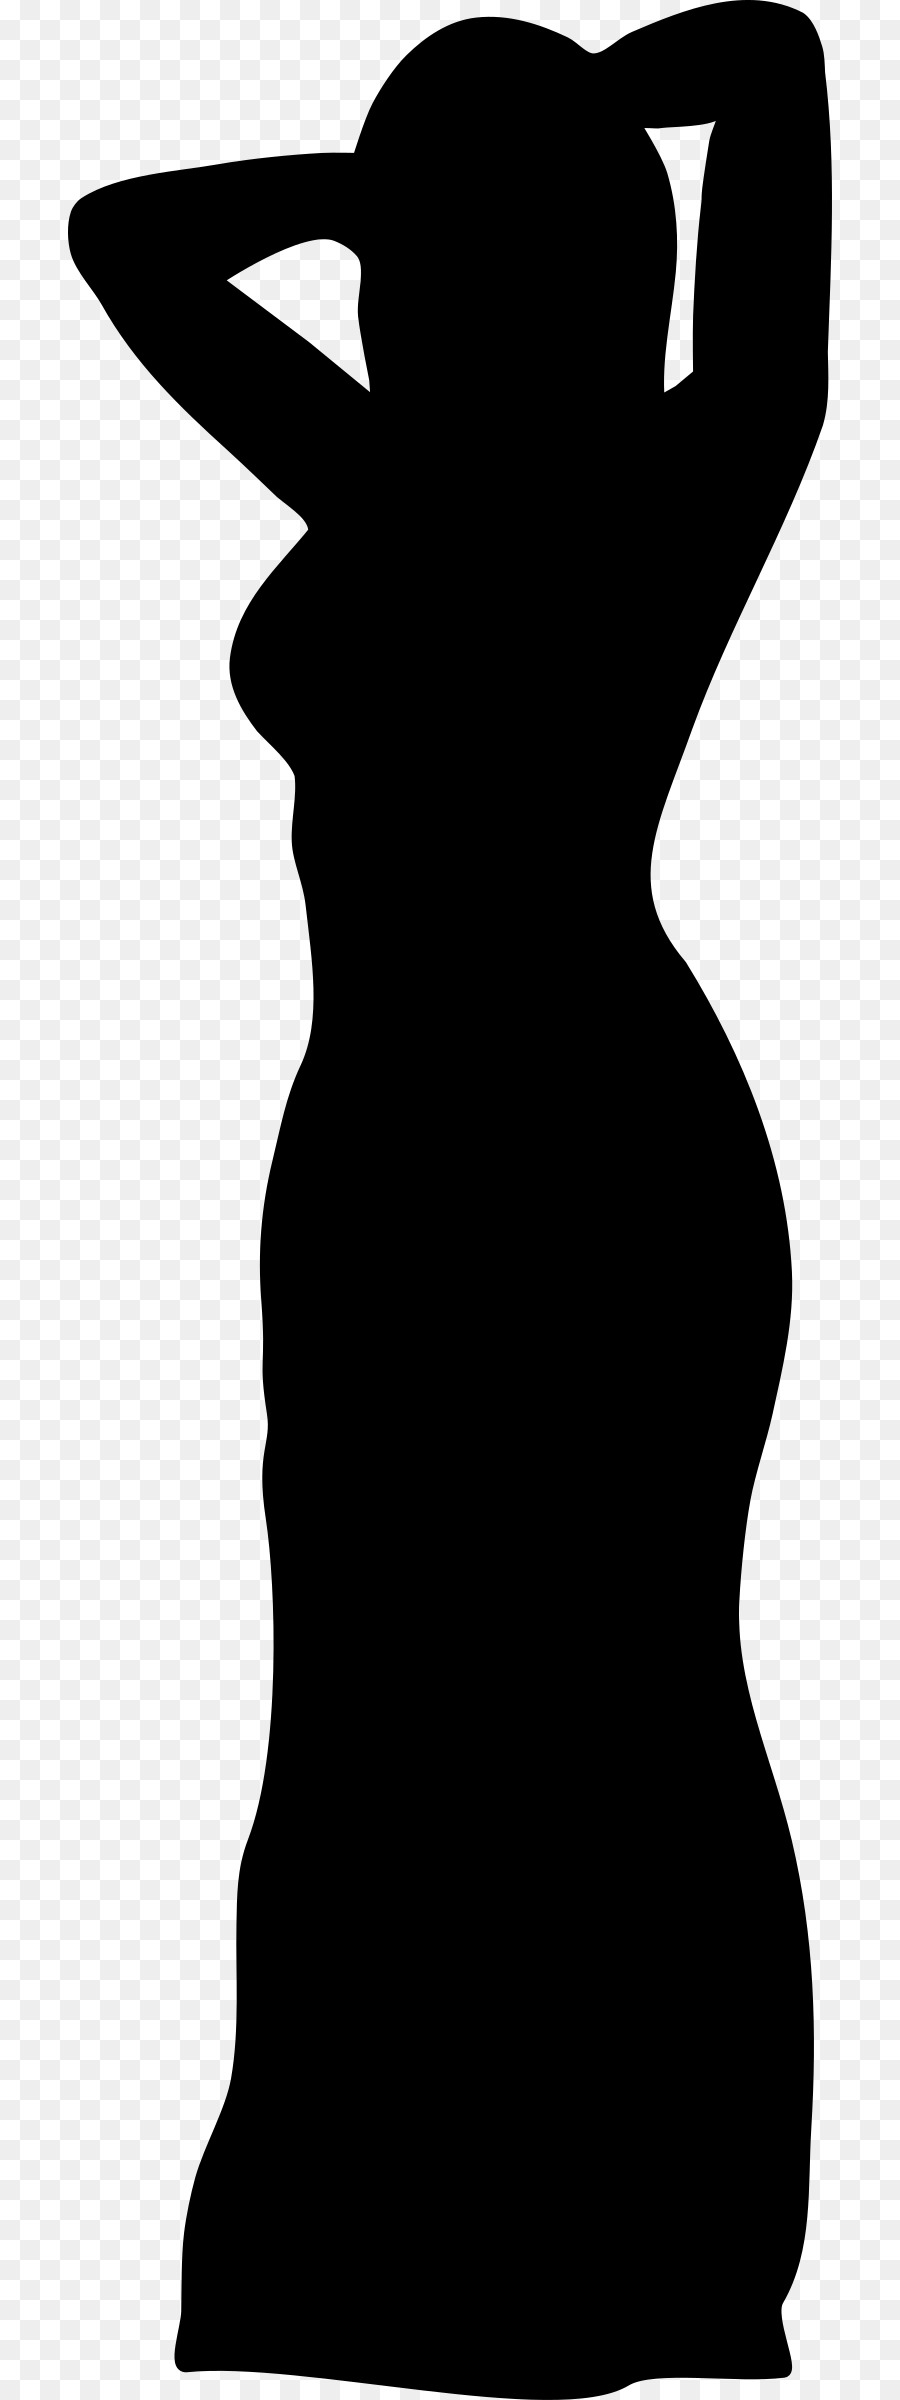 Little black dress Woman Clothing Clip art - women dress png download - 764*2400 - Free Transparent Dress png Download.